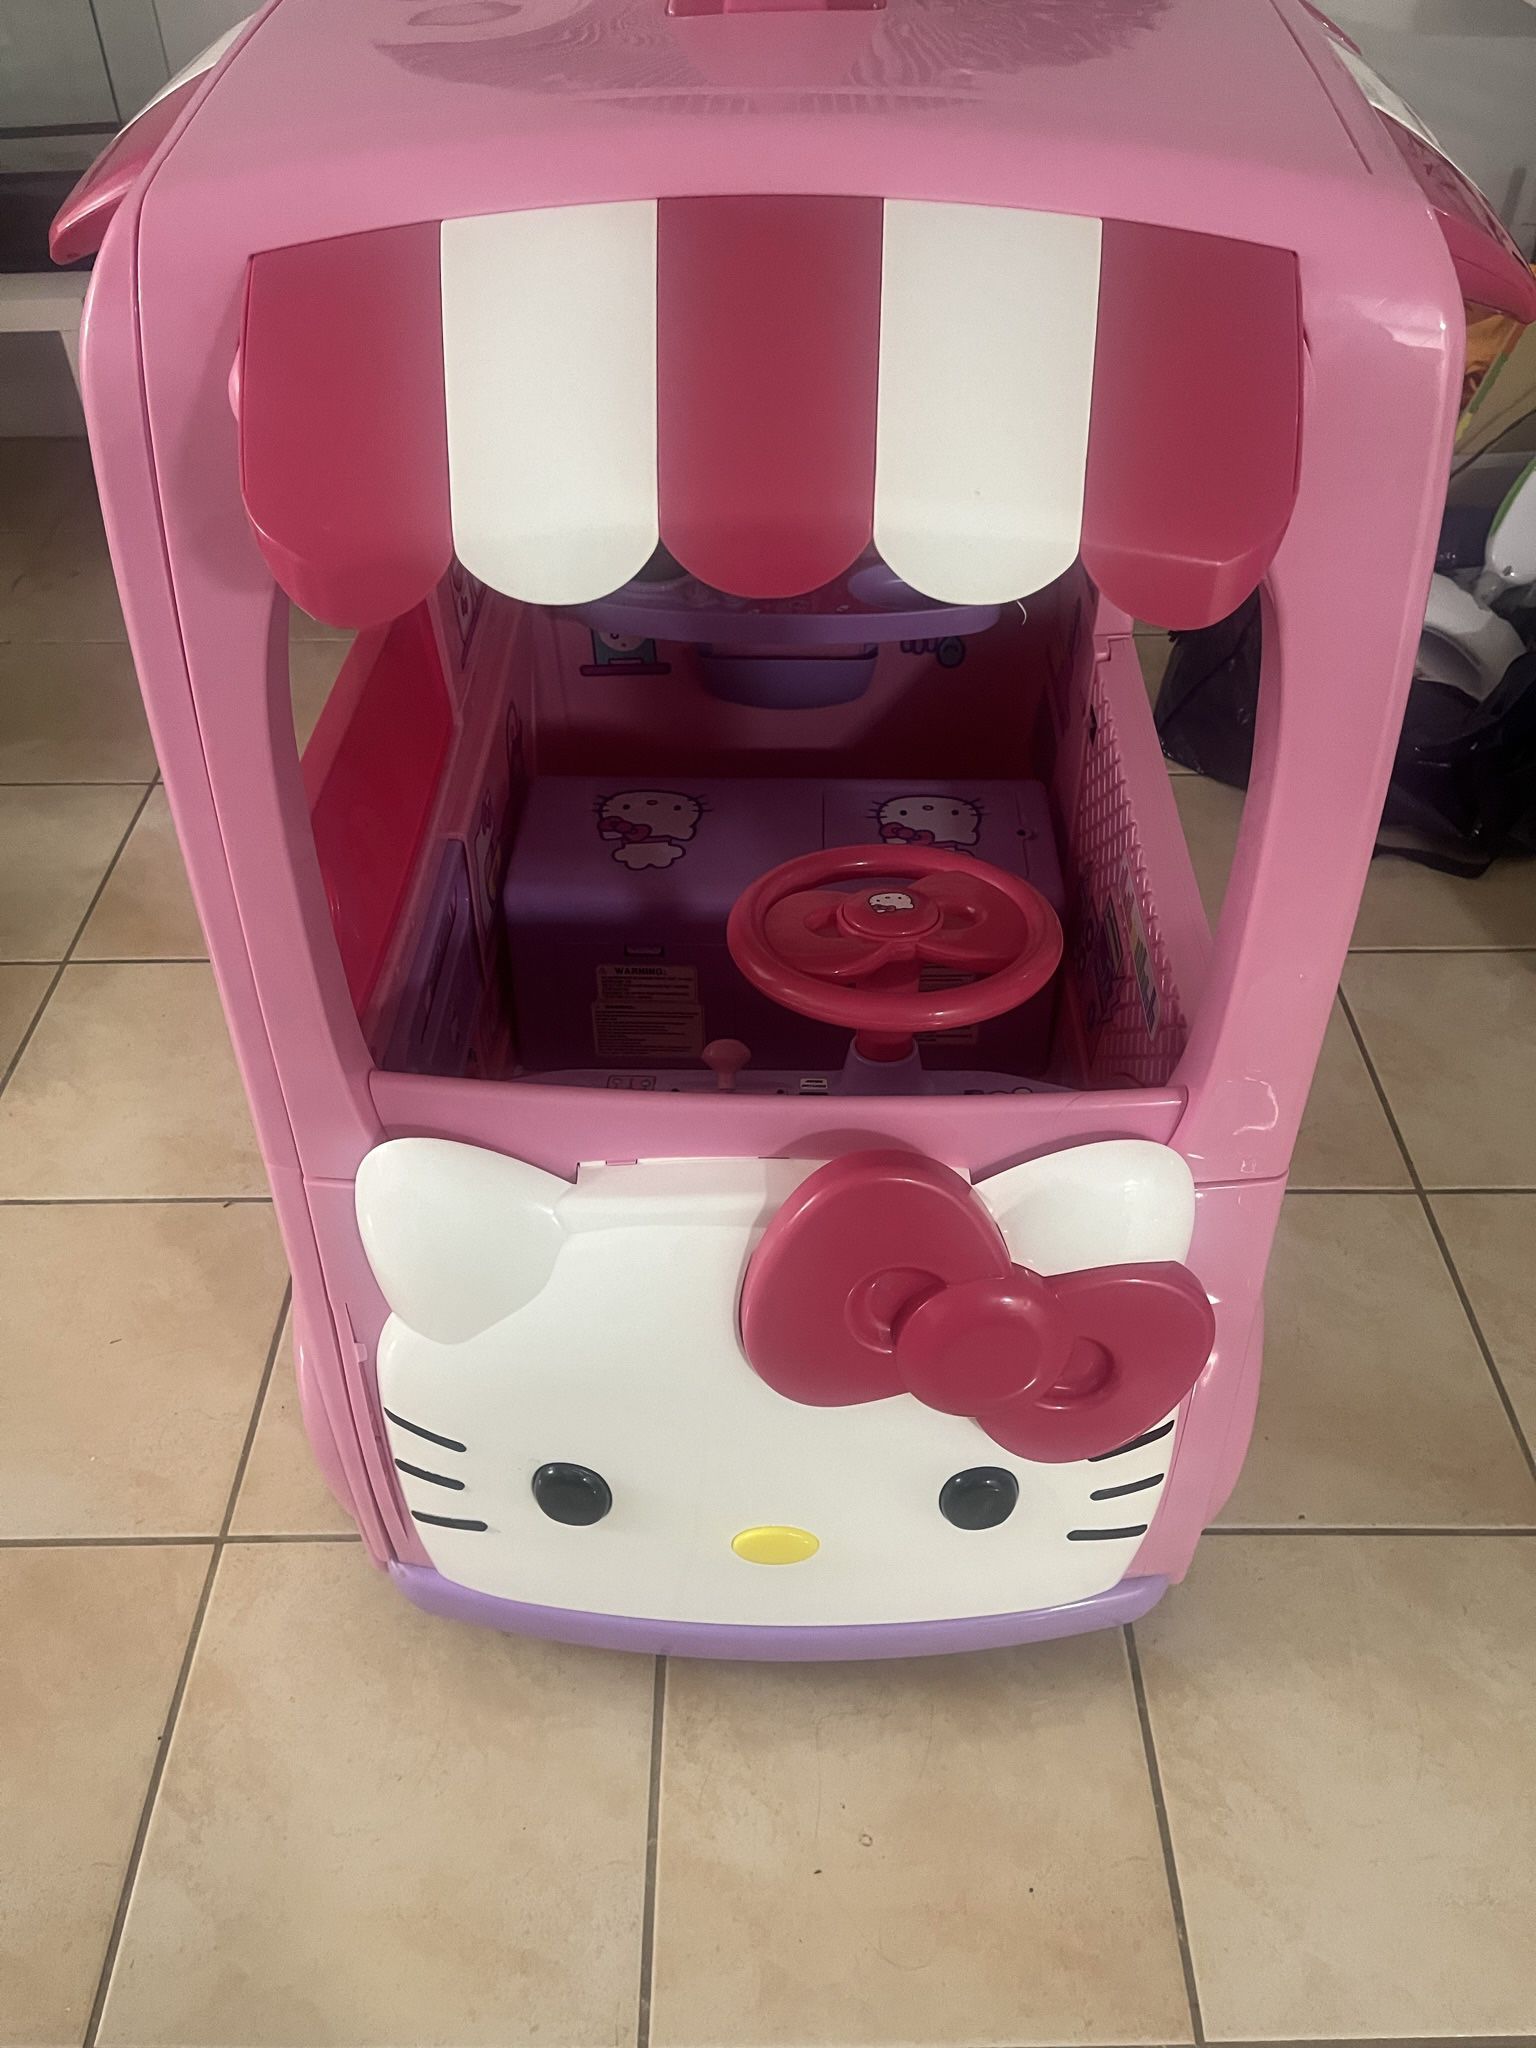 Hello Kitty, camión de comida dulce “Eats and Treats” de 12 voltios, centro de juegos para niños